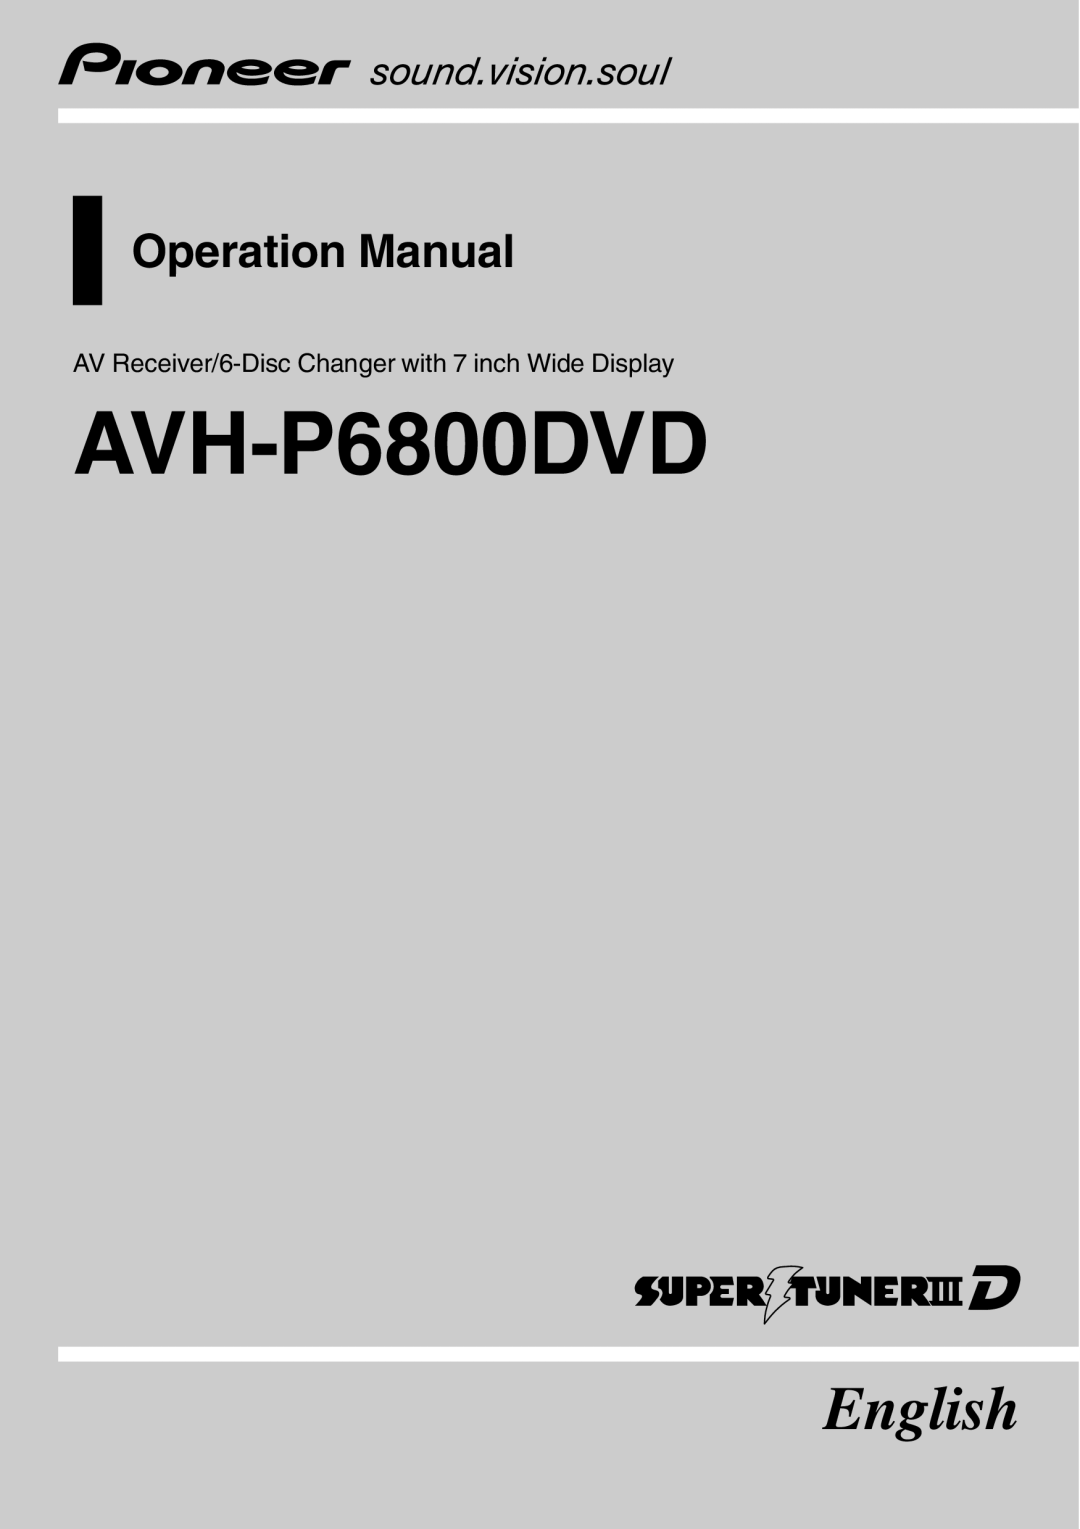 Pioneer AVH-P6800DVD operation manual English, Operation Manual 